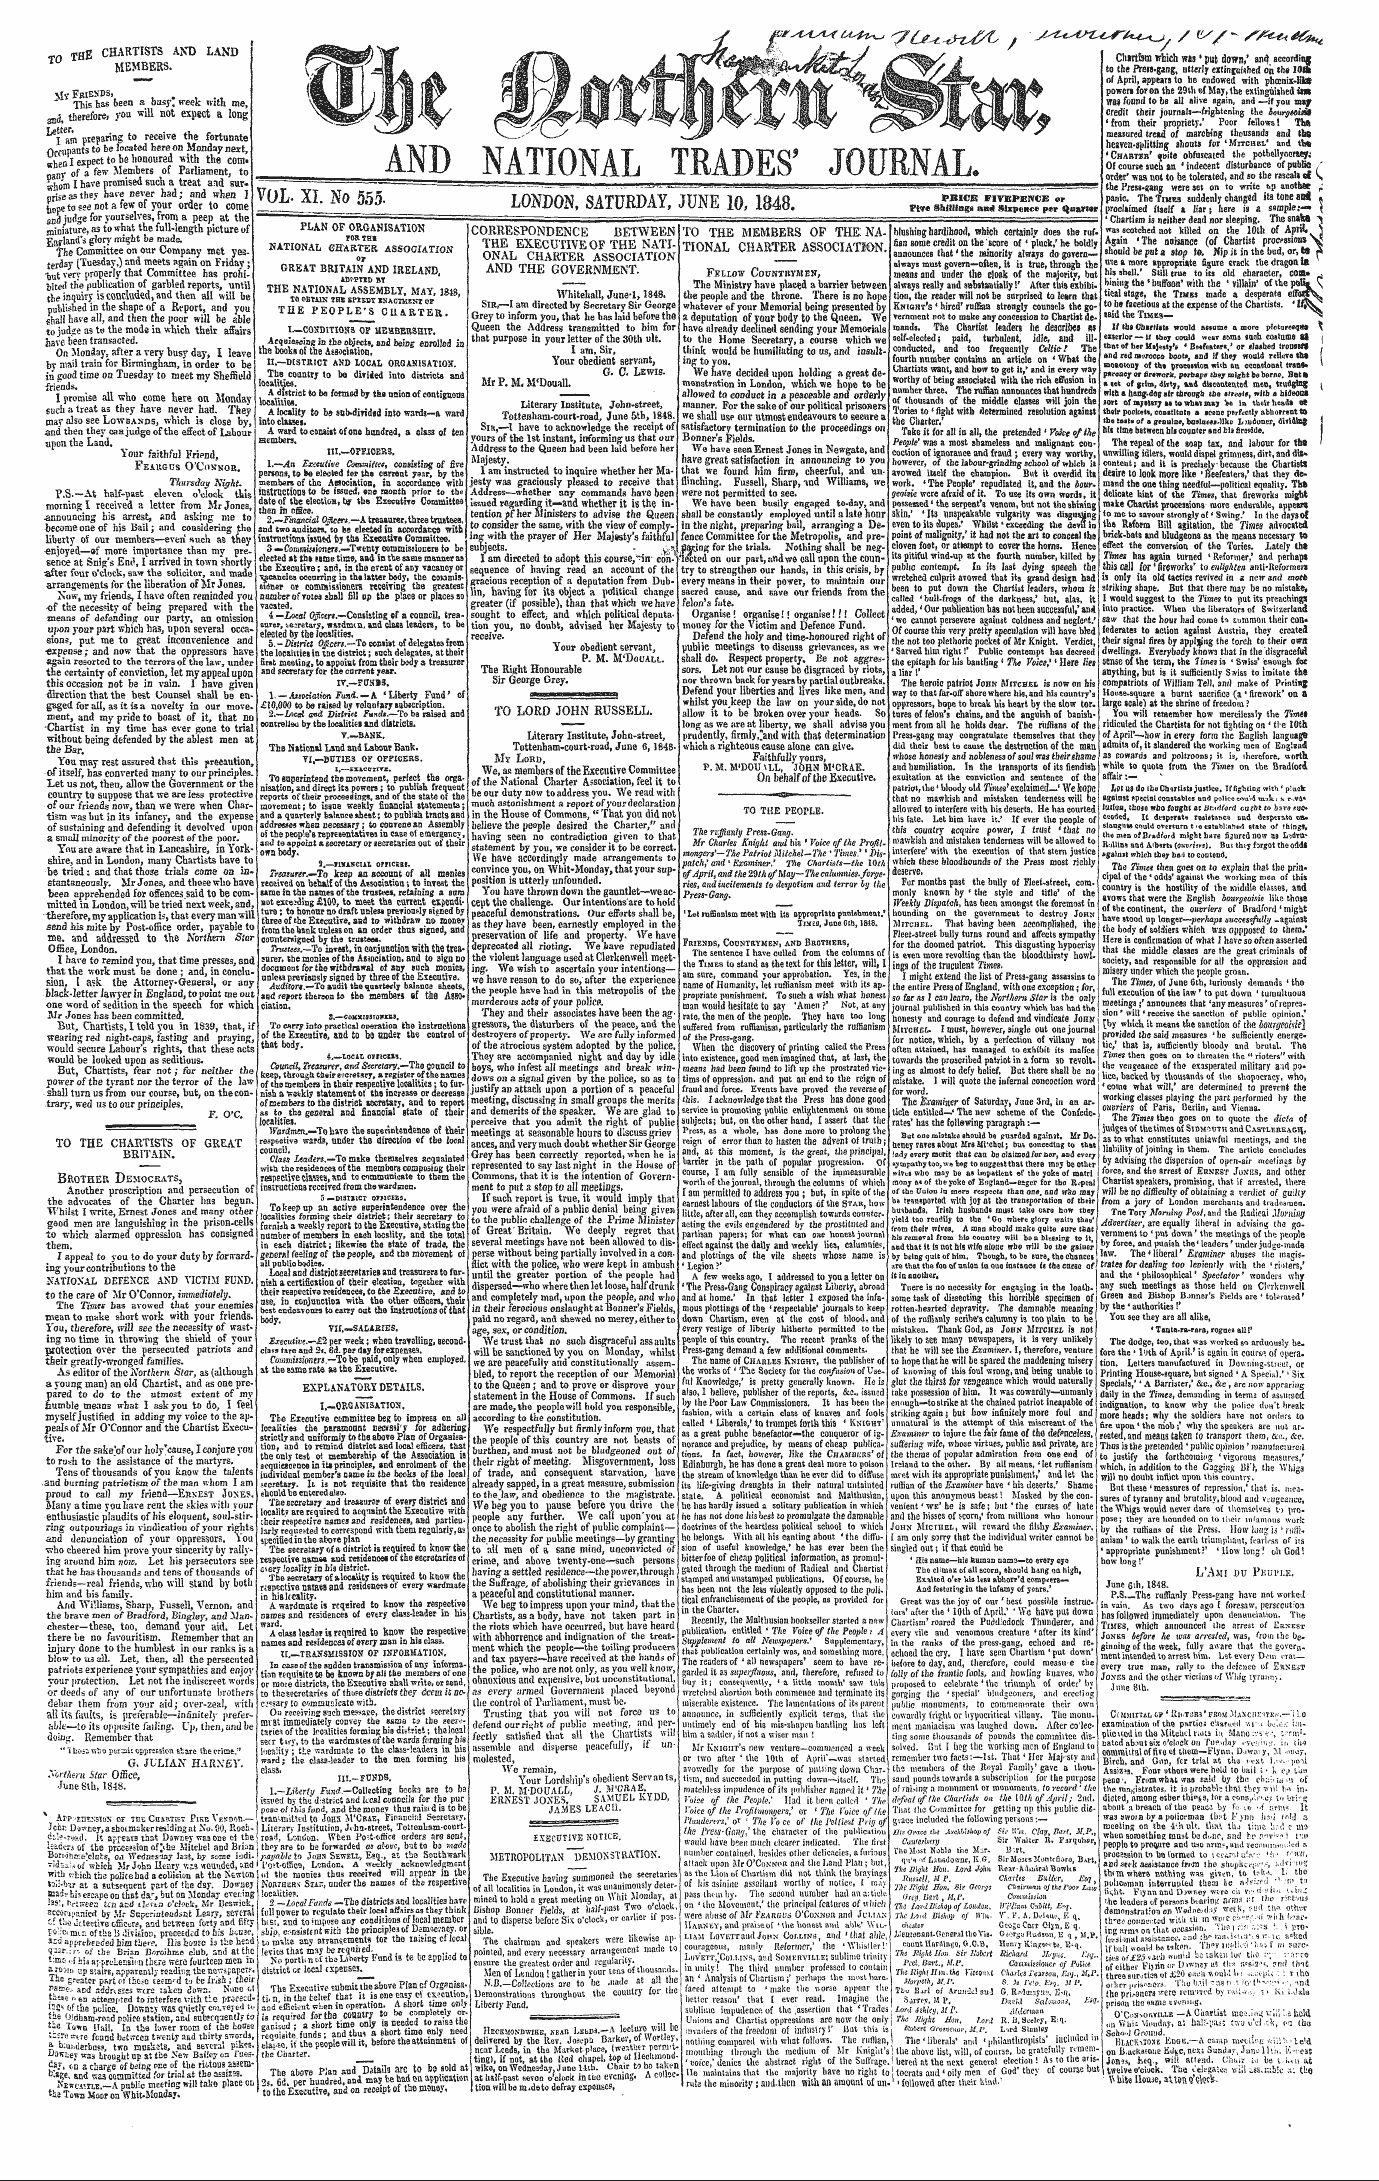 Northern Star (1837-1852): jS F Y, 3rd edition - Cl'mmittal M* ' Uli.Tl!R3 ' From Mancnk'...